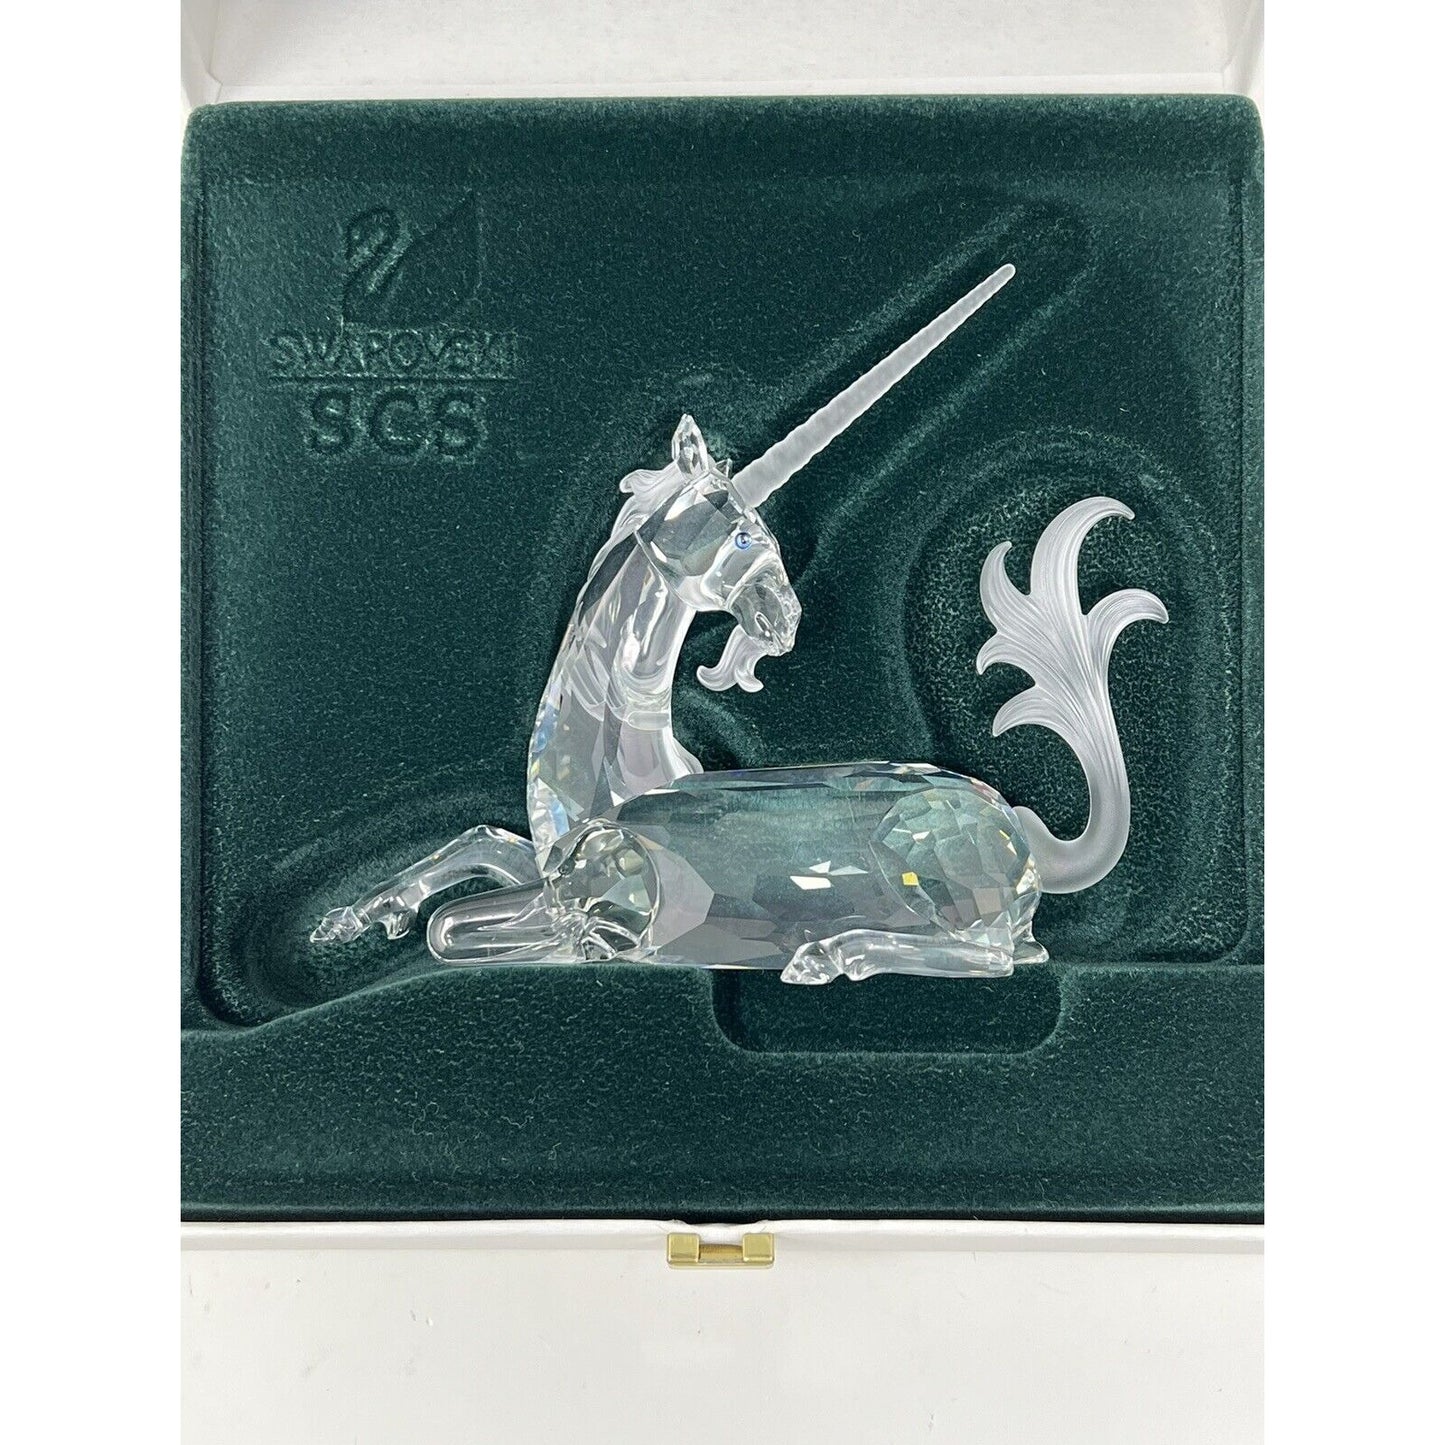 Retired 1996 Swarovski 191727 Fabulous Creature Unicorn Annual Crystal Figurine